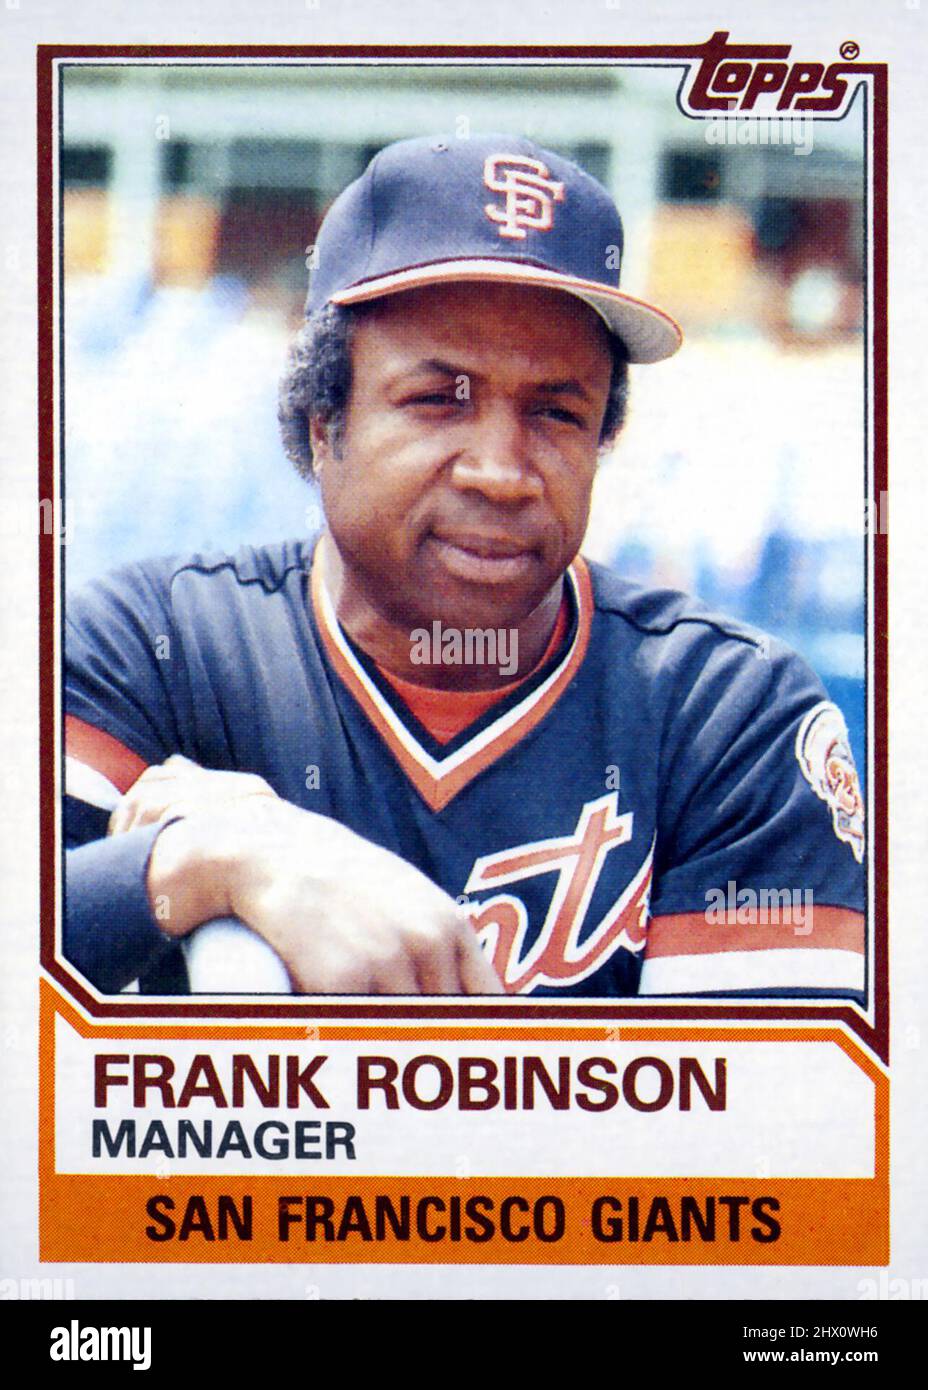 1983 Topps Baseballkarte mit dem Teamchef Frank Robinson von San Francisco Giants Stockfoto